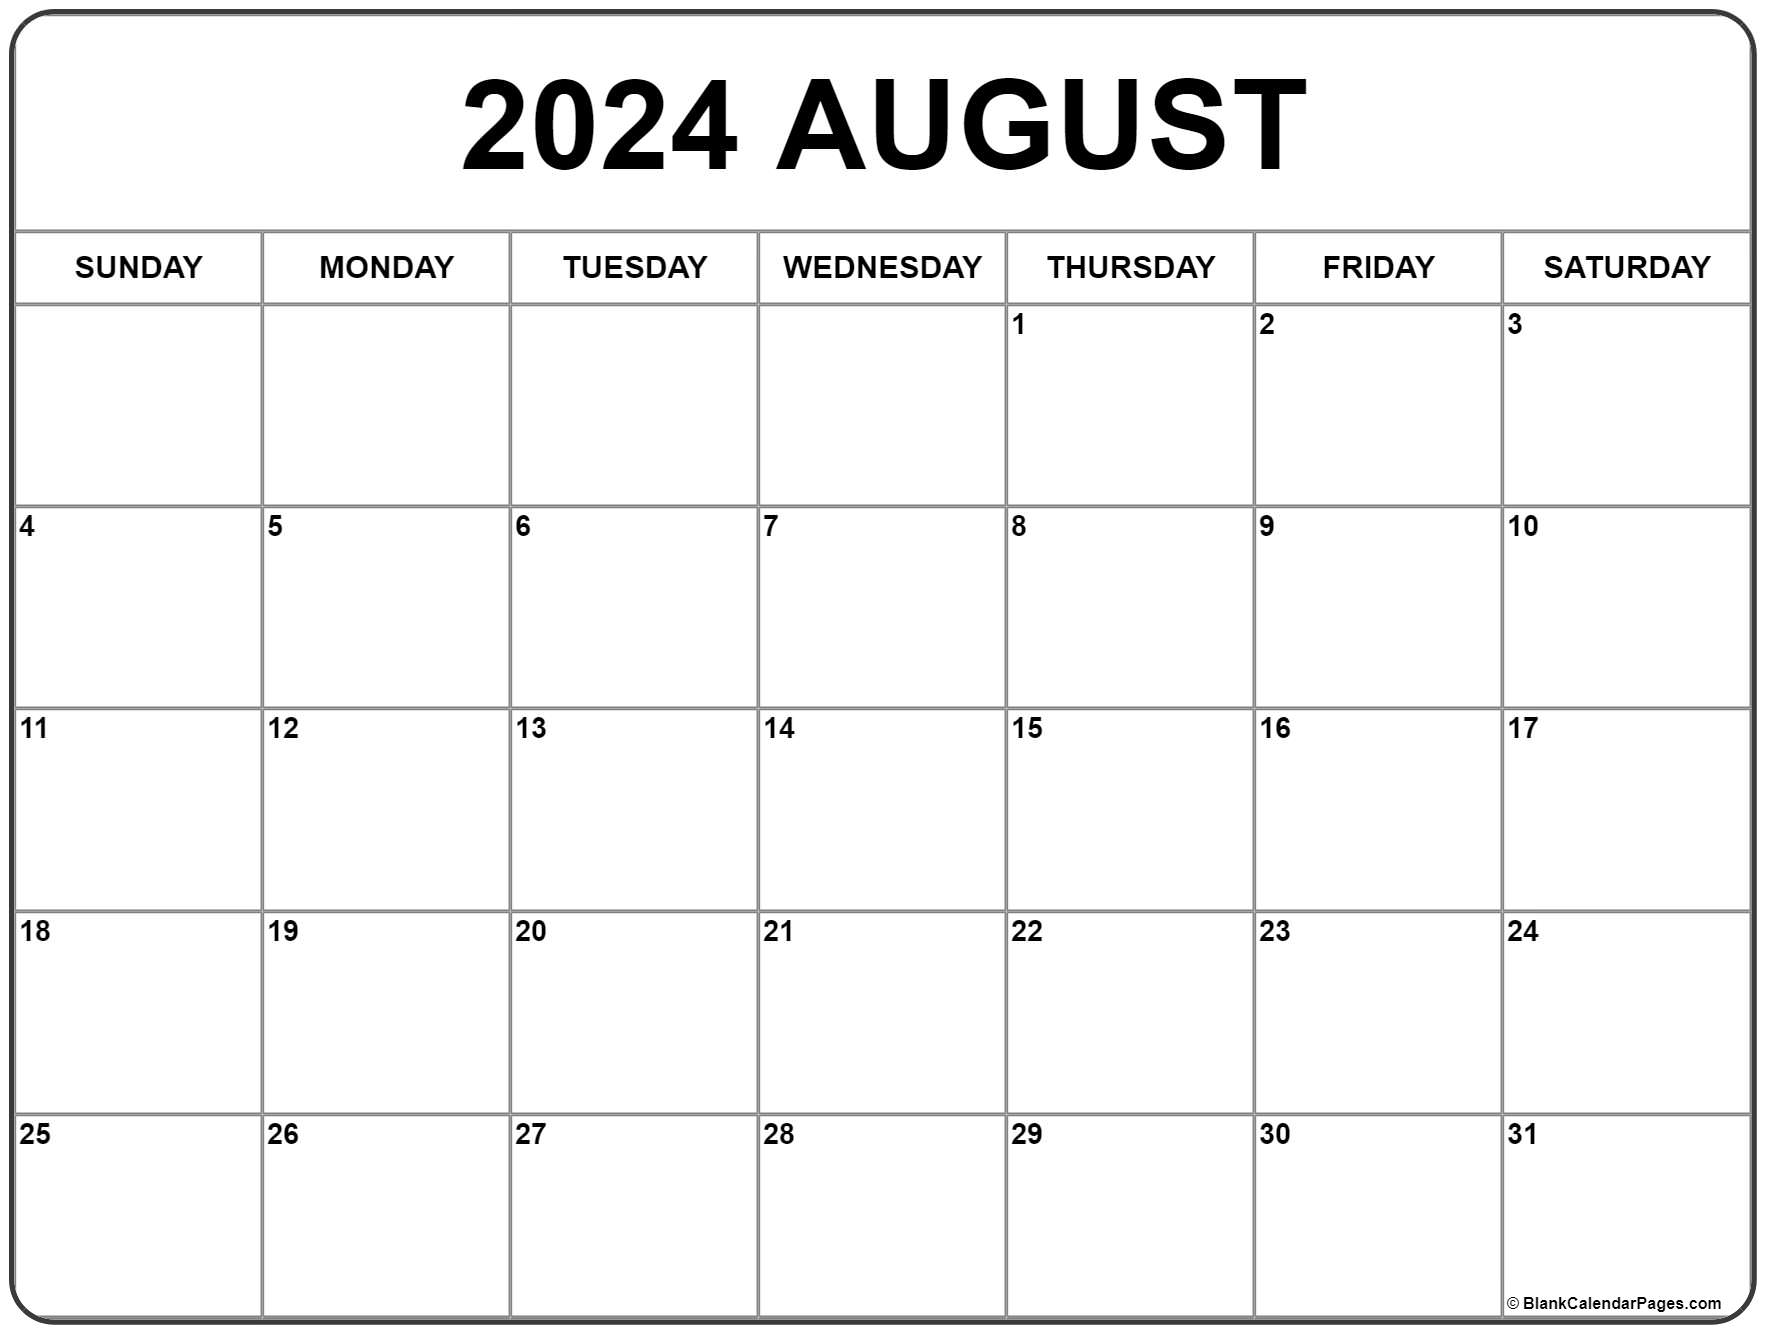 Monthly Calendar 2022 August August 2022 Calendar | Free Printable Calendar Templates